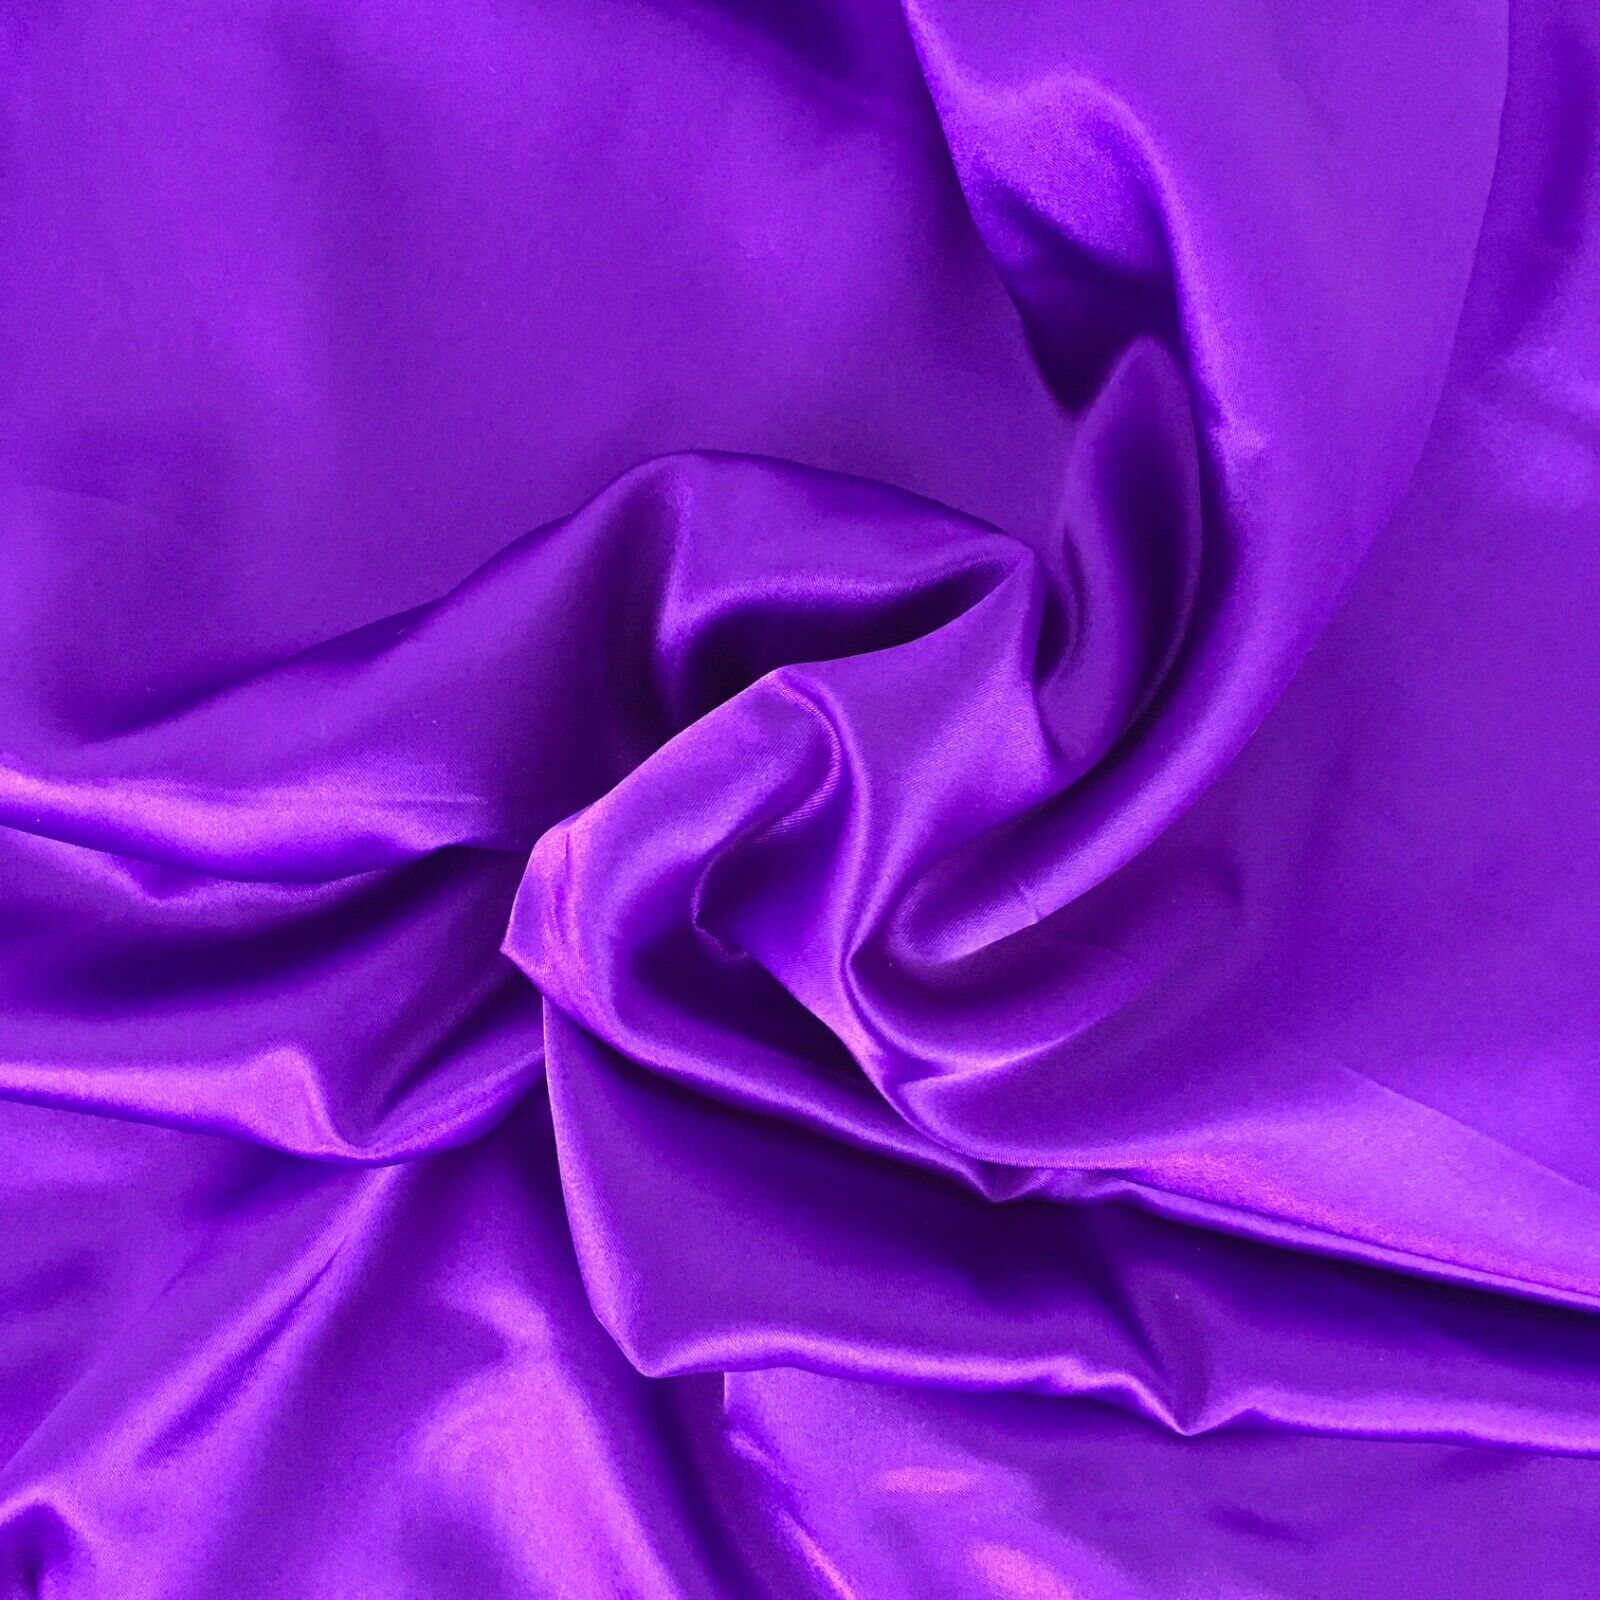 Vintage Westwood purple satin wet look glossy fabric 4 yards sewing crafting